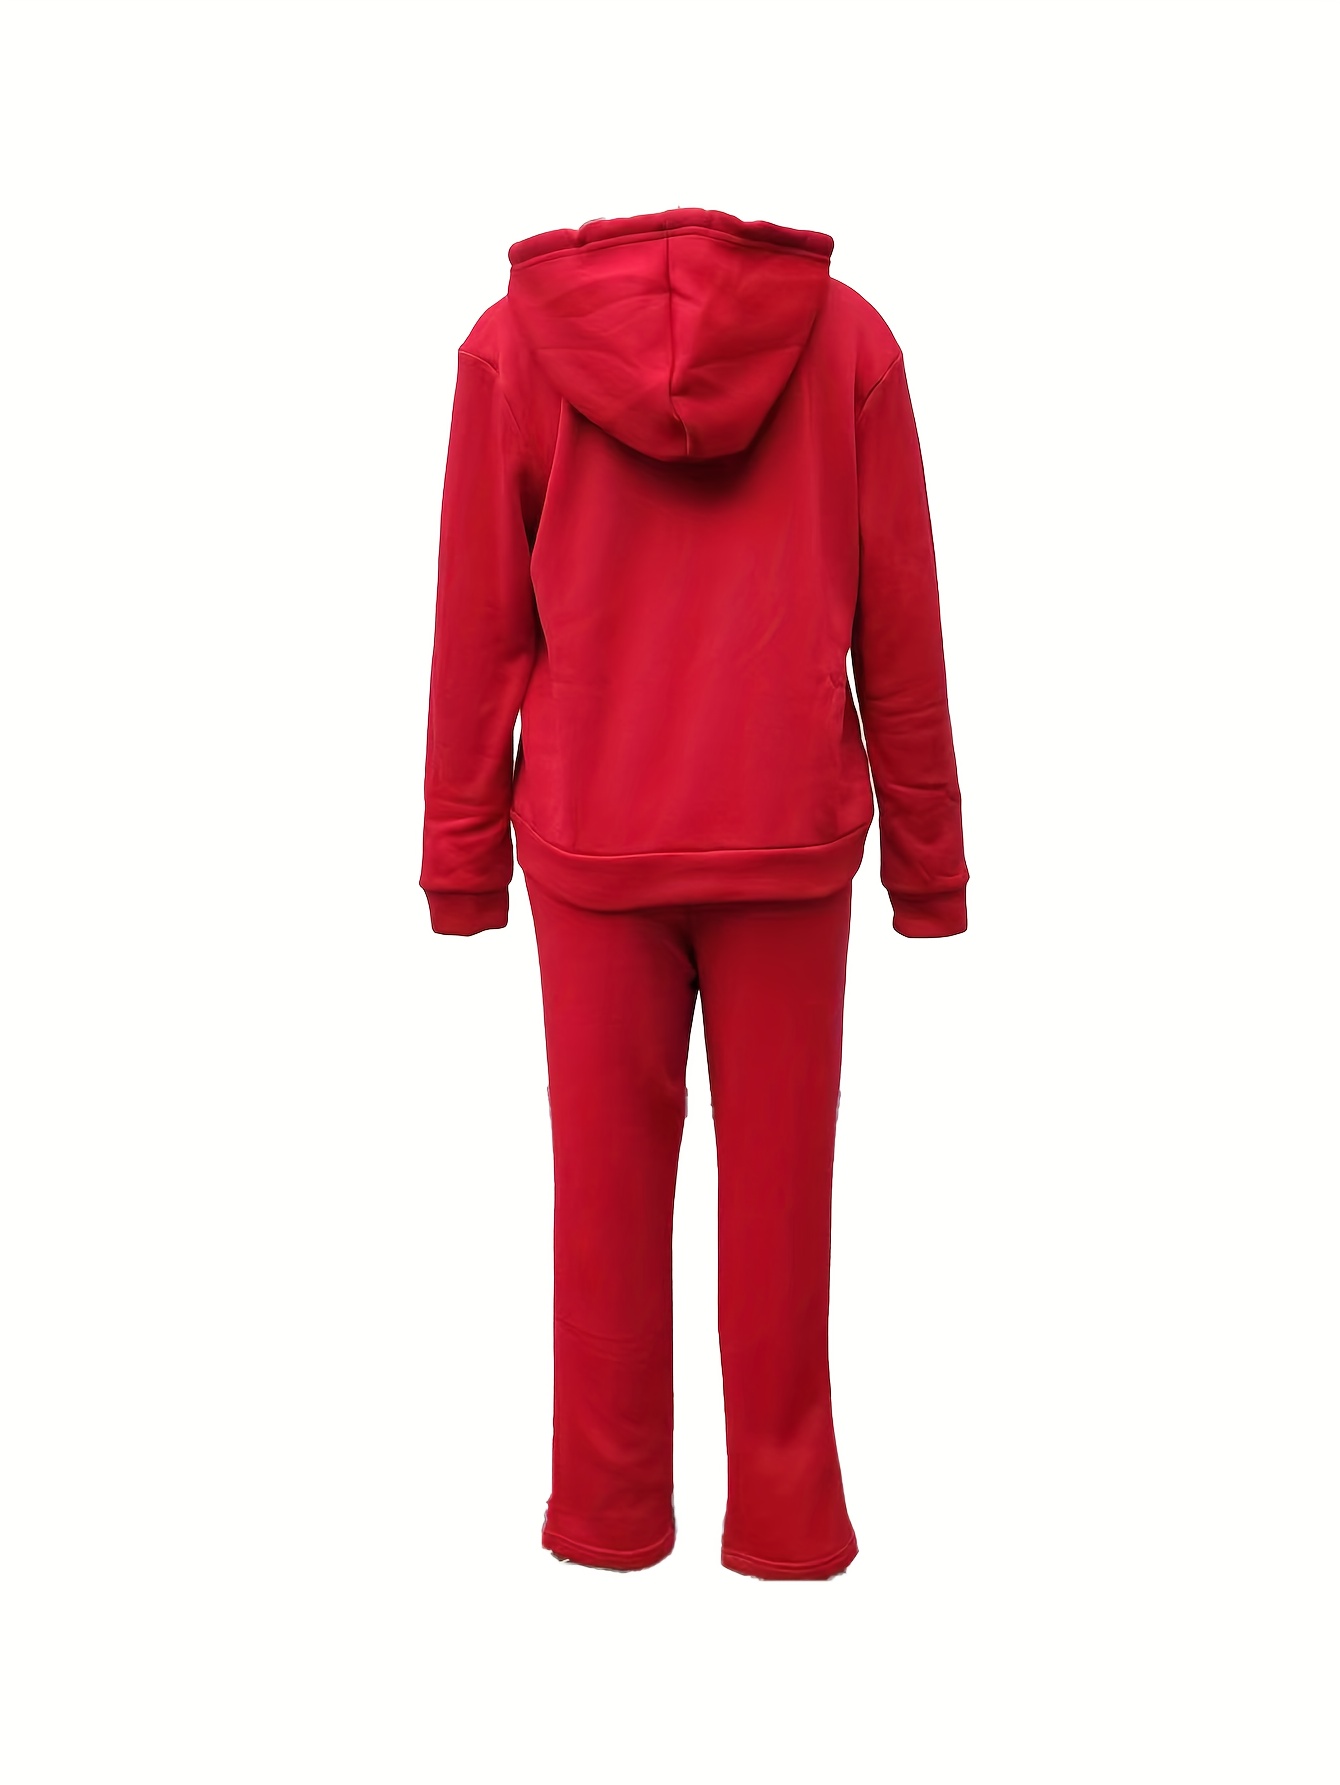 Kids Girls Boys Plain Red Hooded Hoodie Tracksuit Jogging Suit